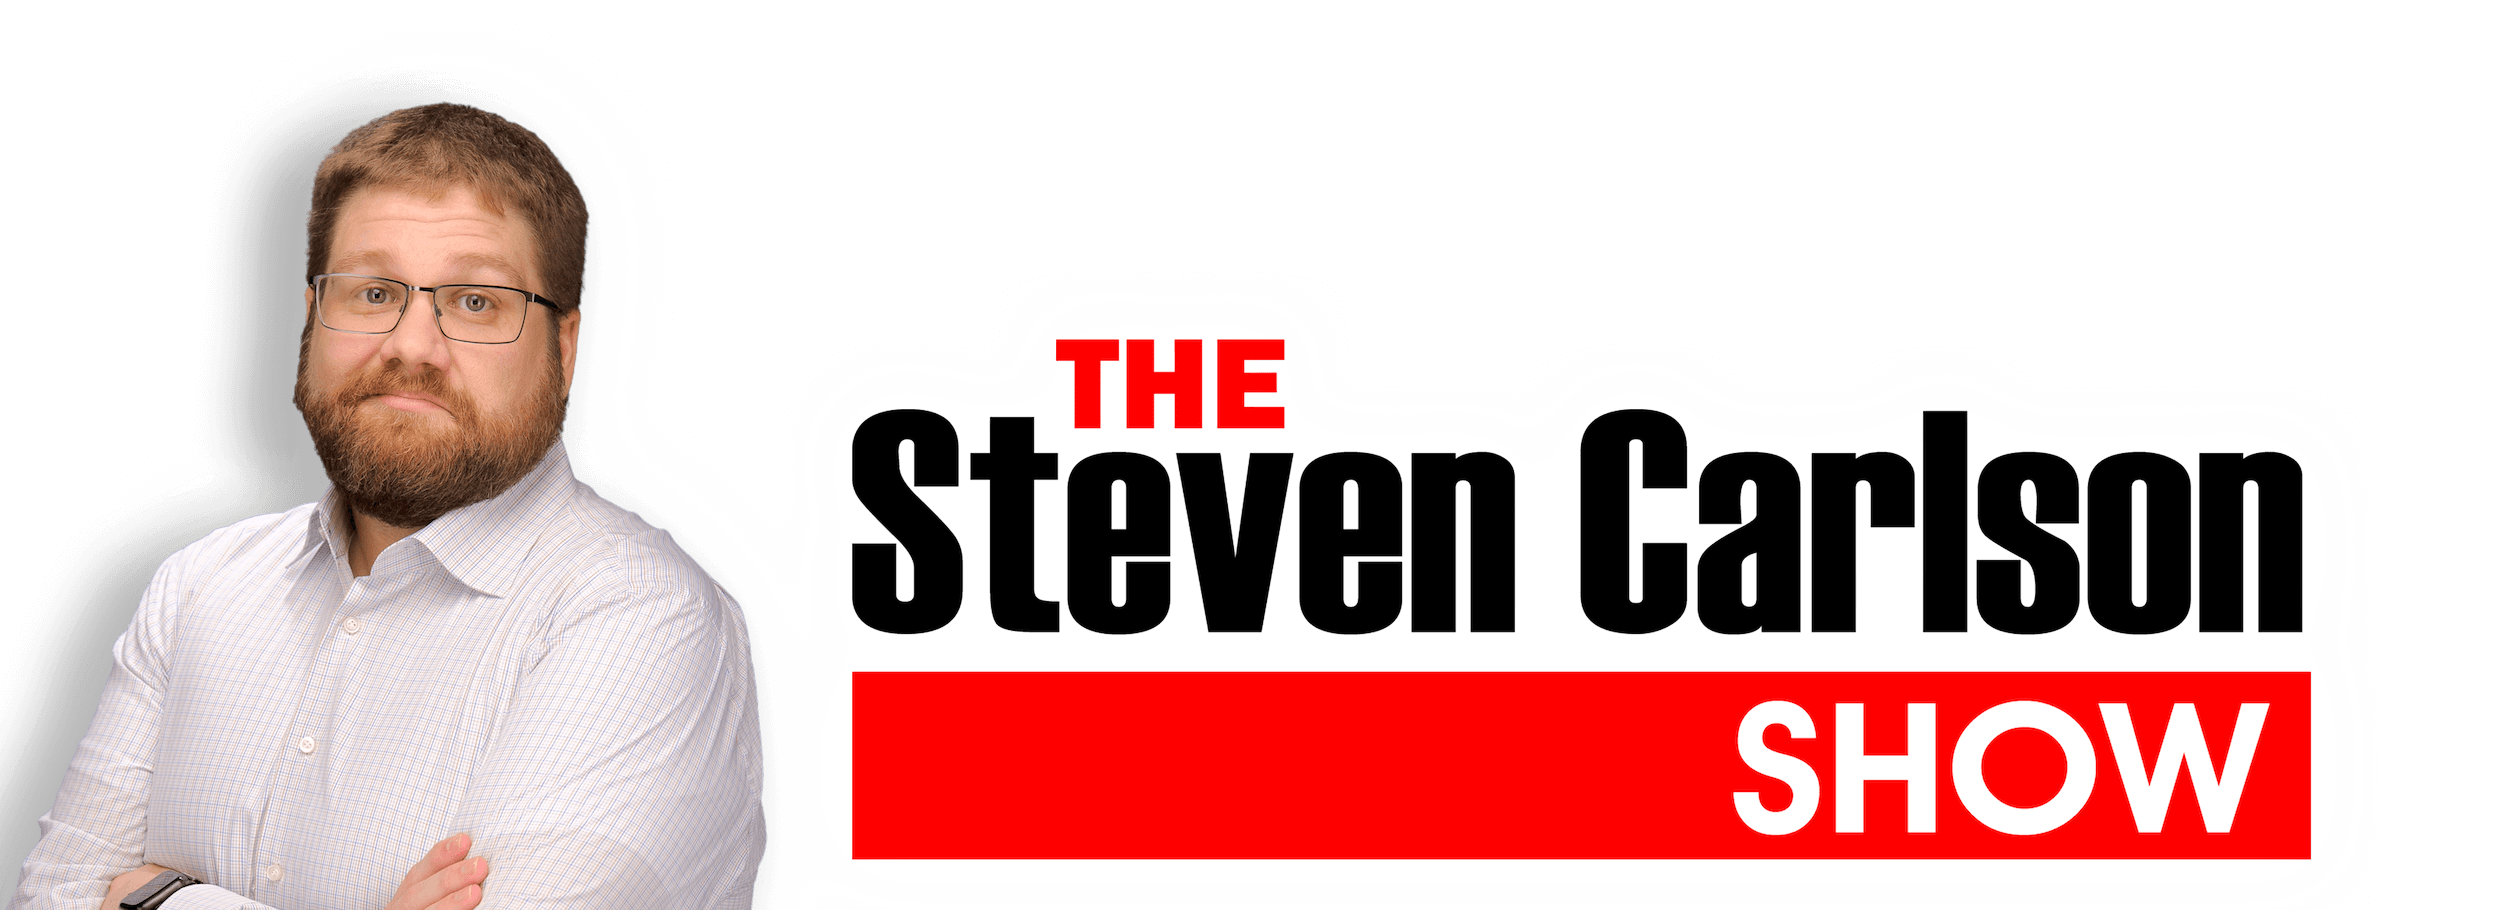 The Steven Carlson Show Logo